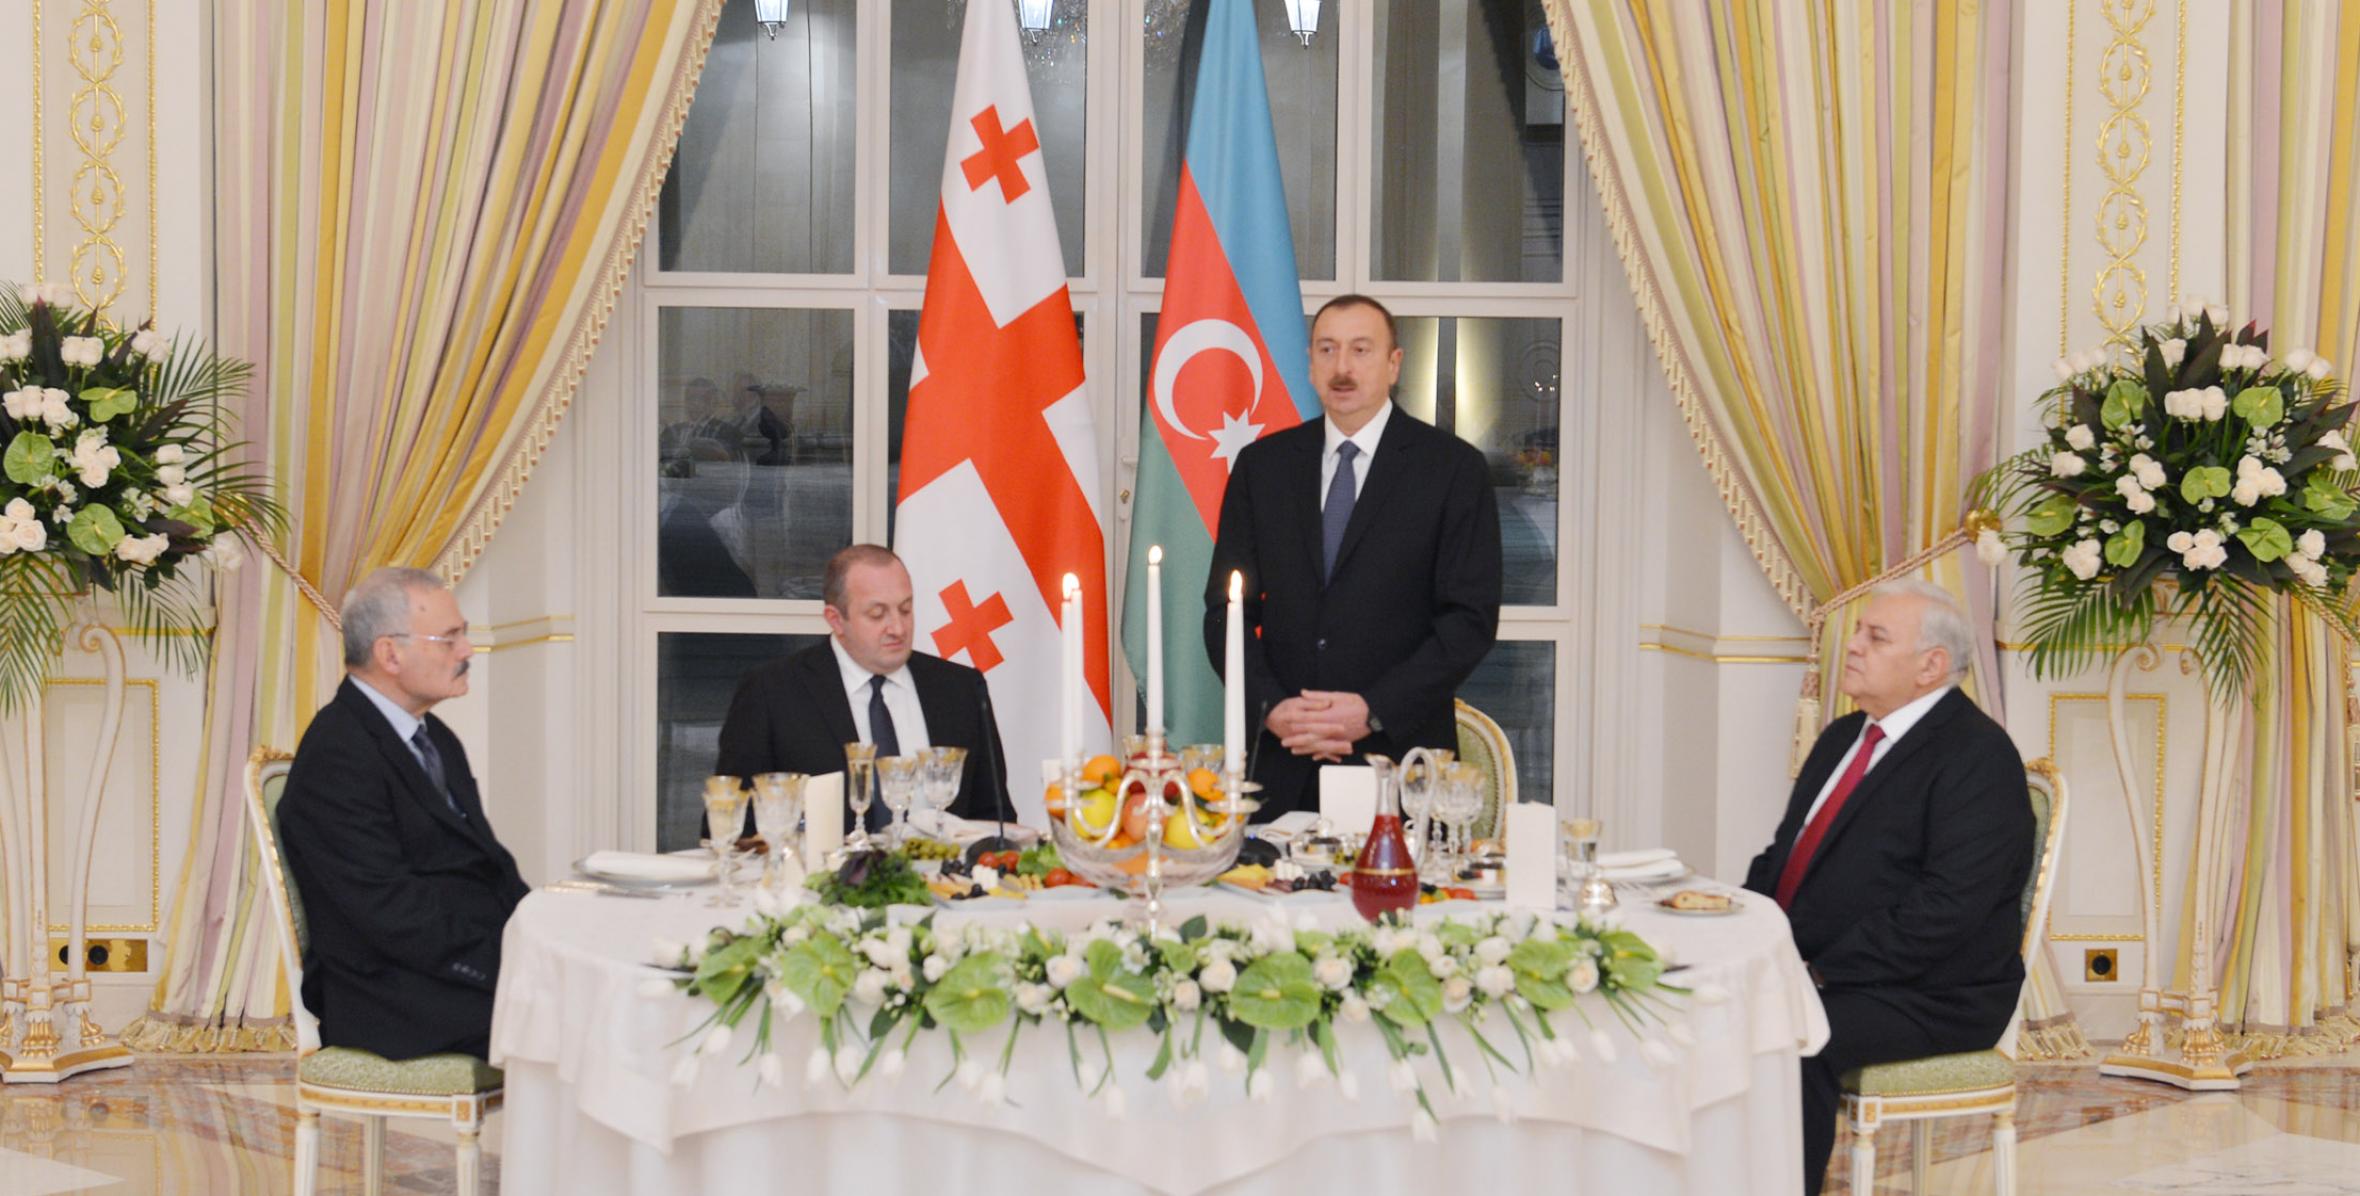 Ilham Aliyev hosted an official reception in honor of President of Georgia Giorgi Margvelashvili